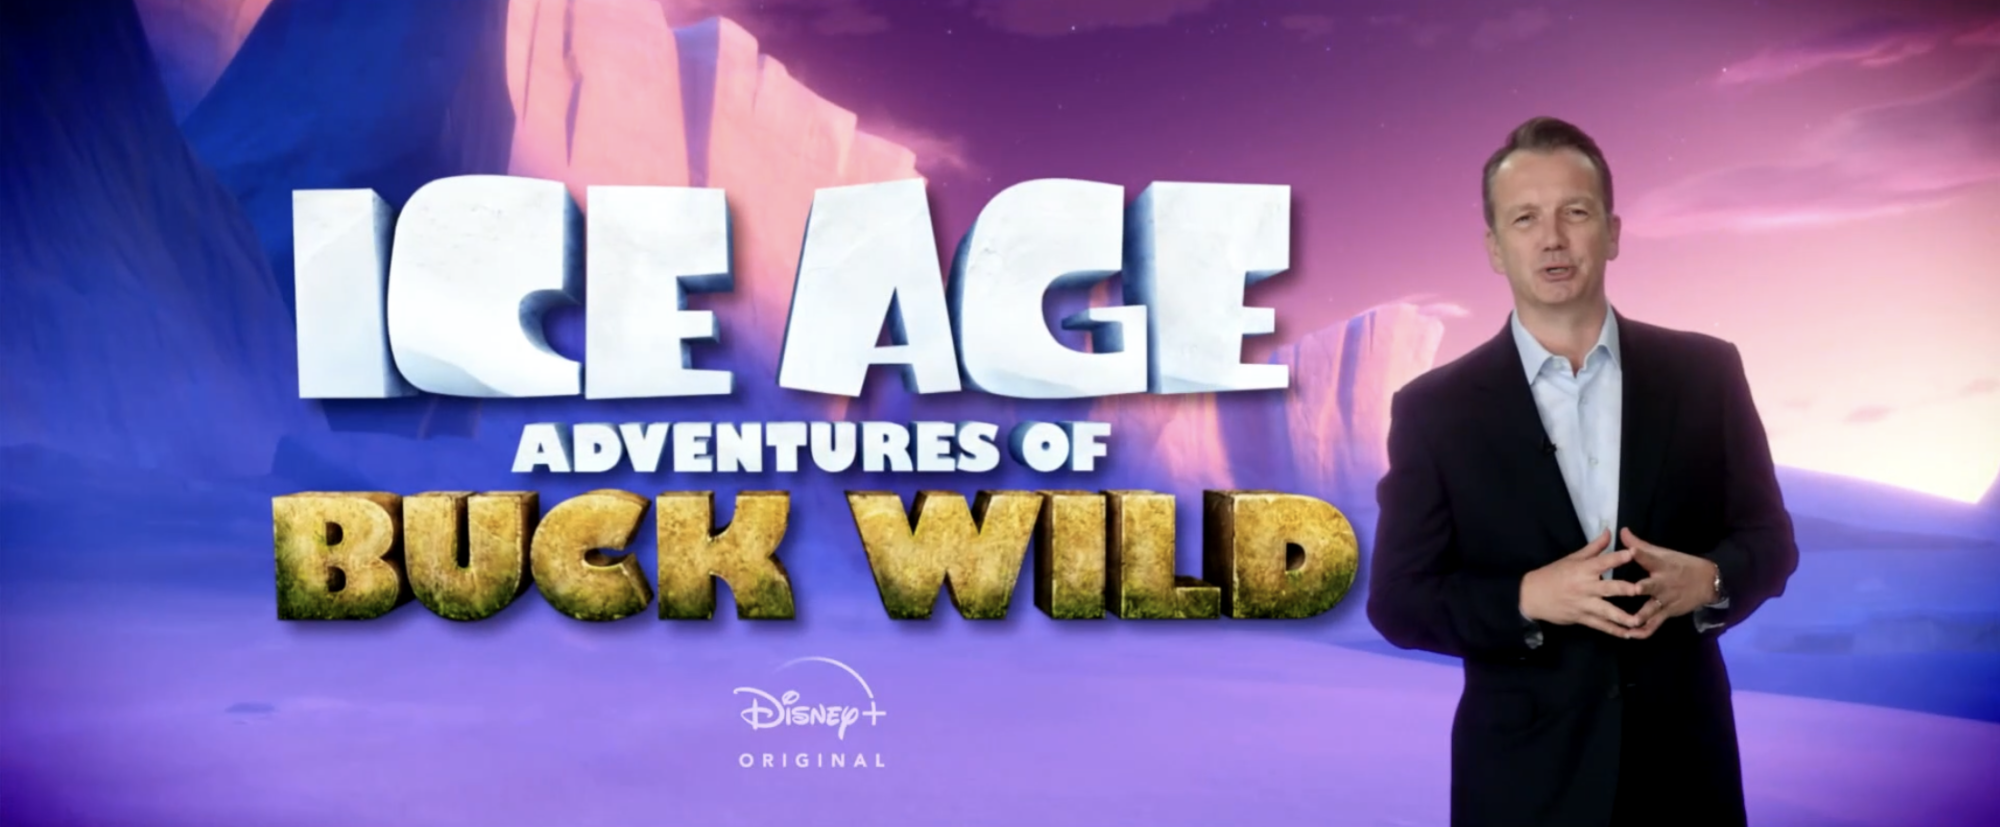 Ice Age adventures of Buck Wilde